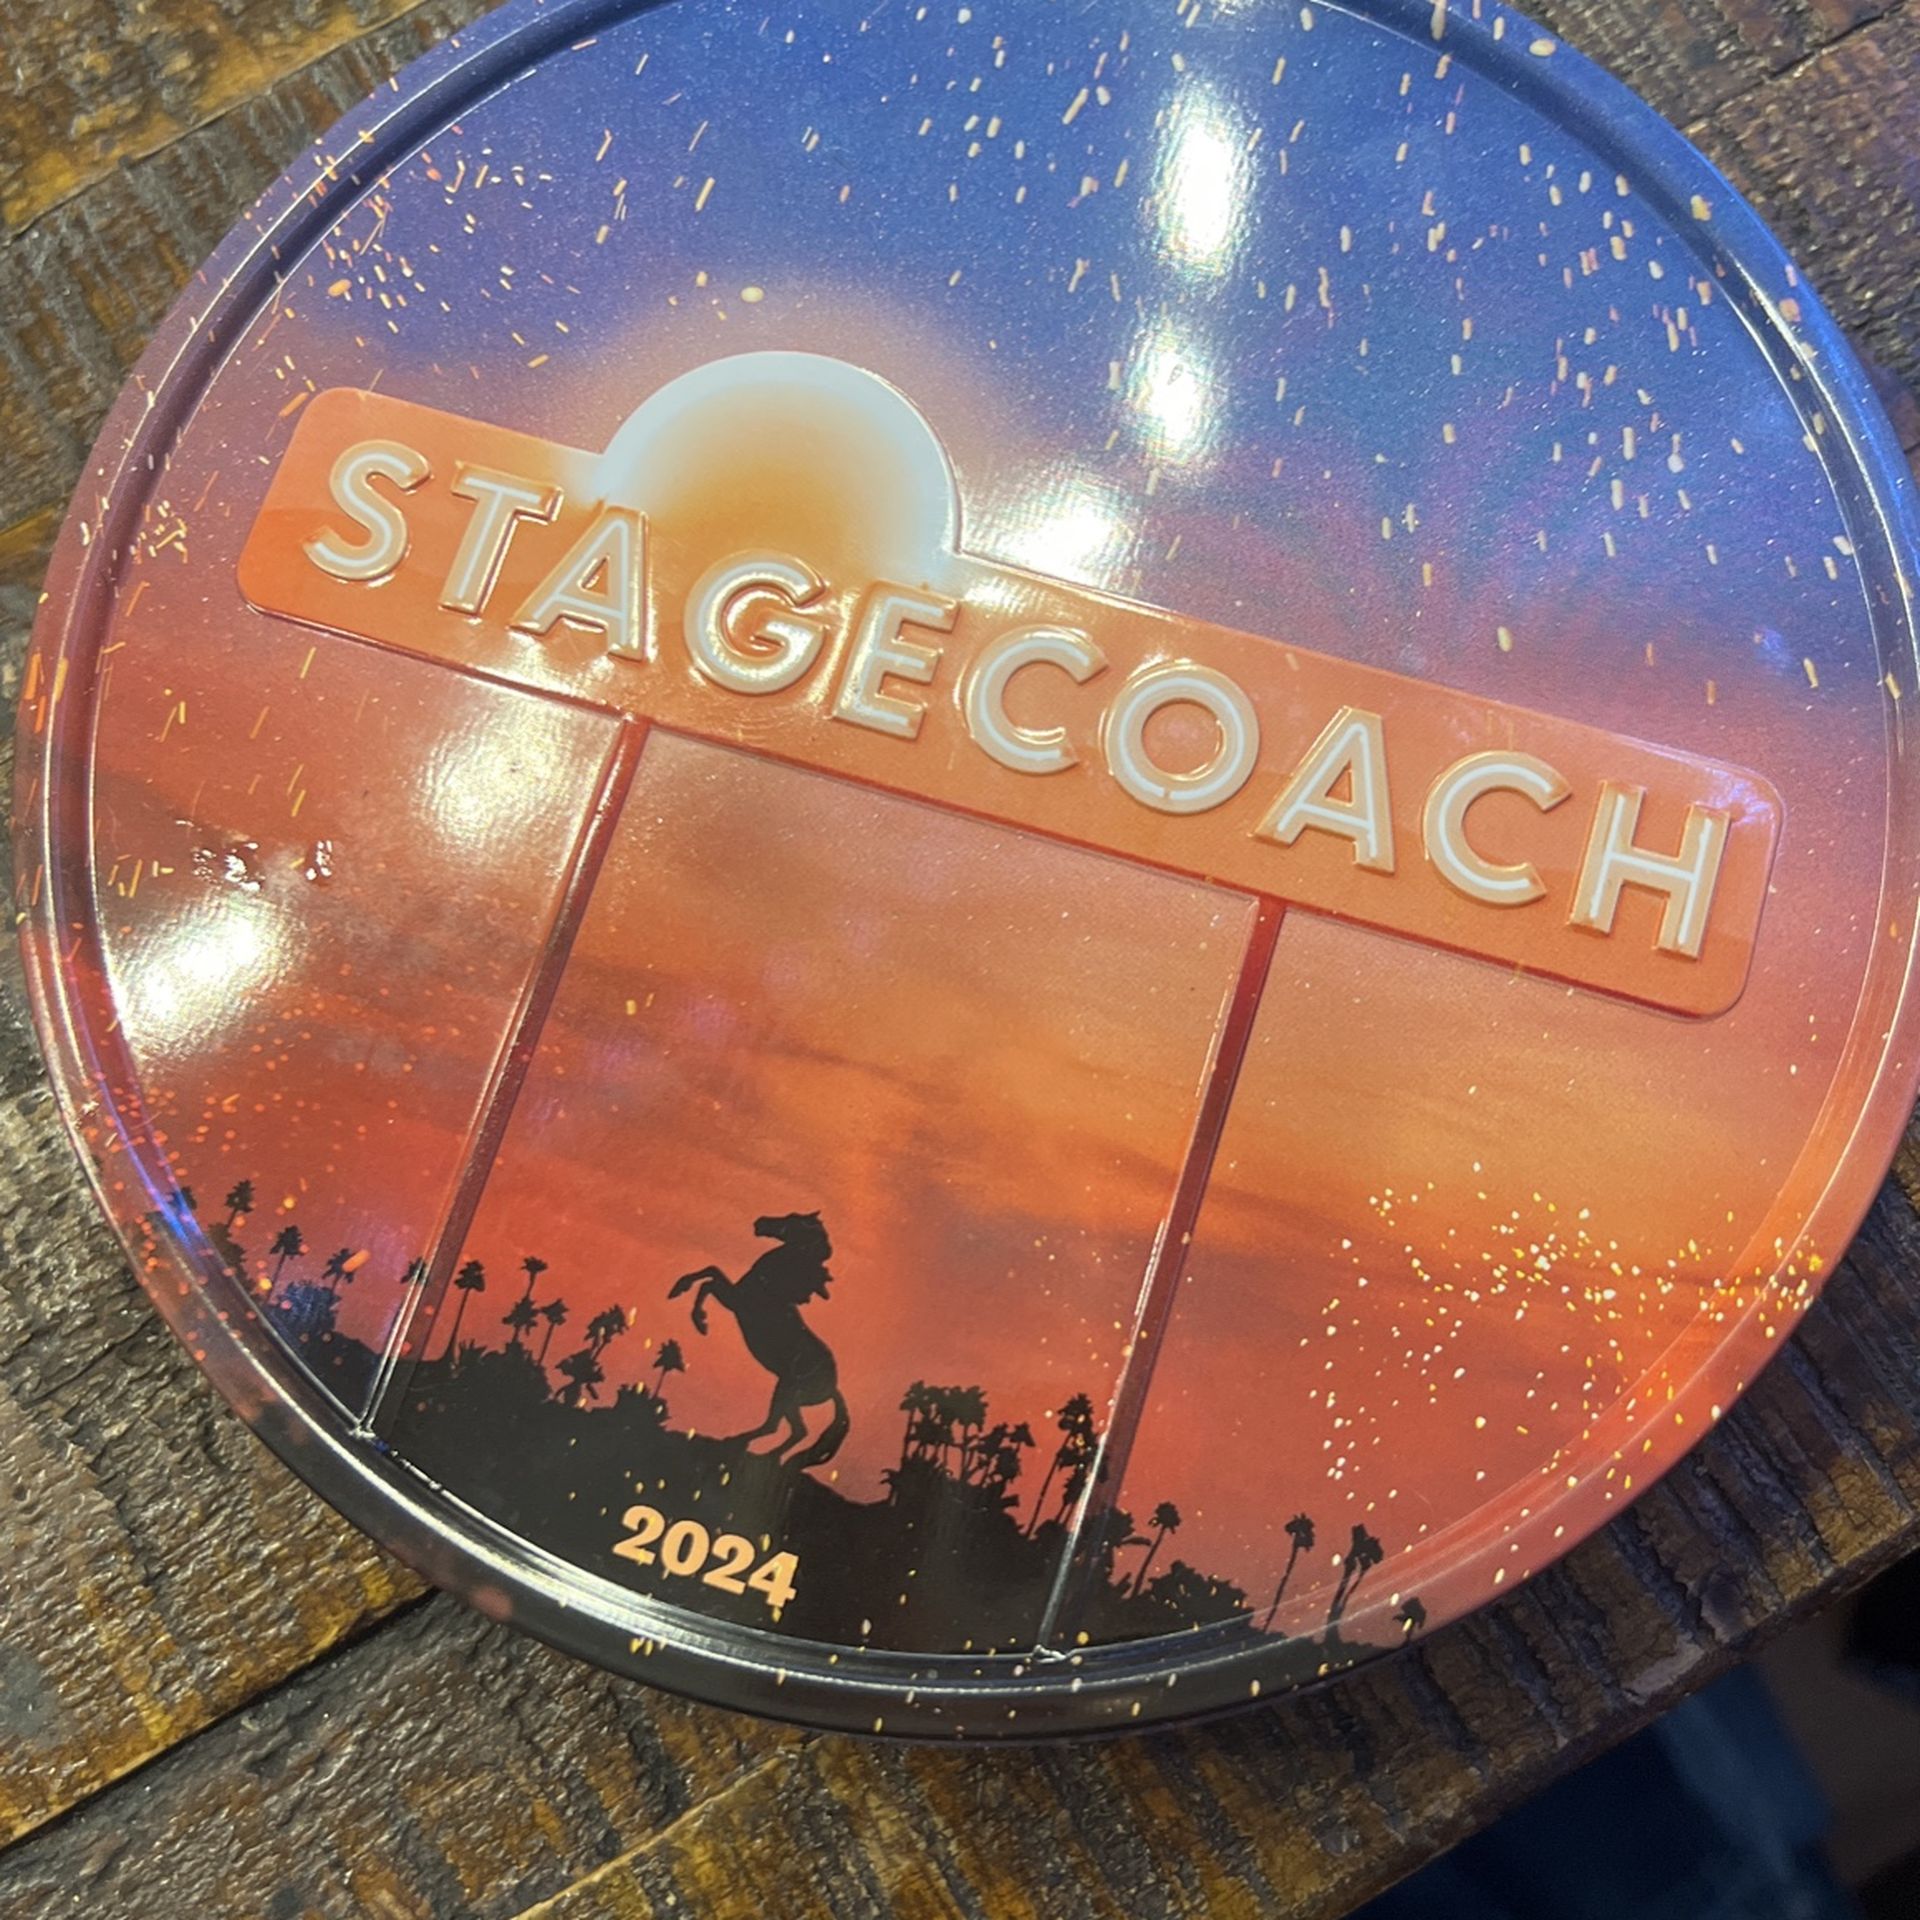 Stagecoach Tickets